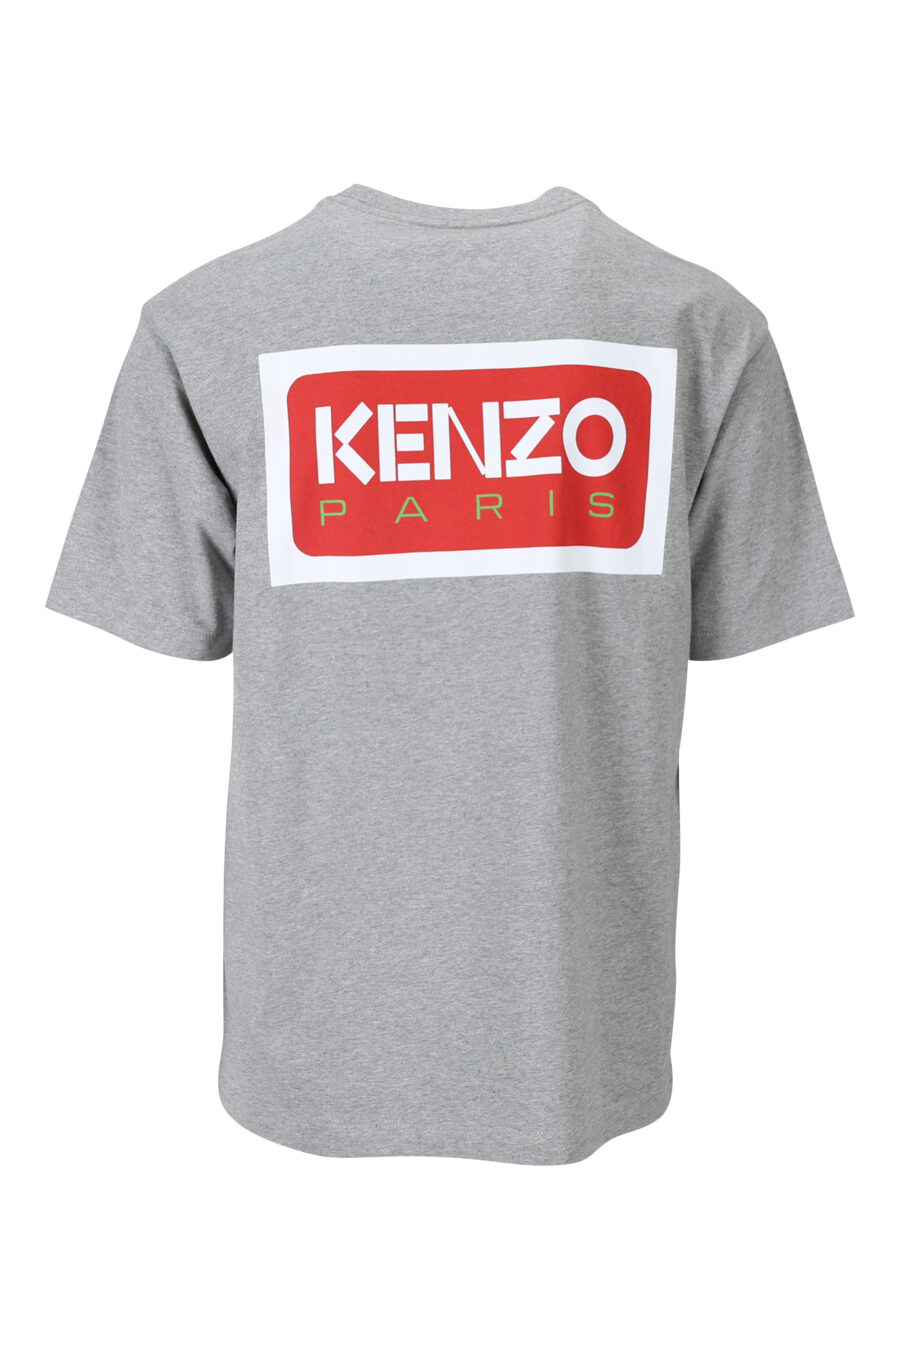 Graues T-shirt mit Minilogo "kenzo paris" - 3612230543188 1